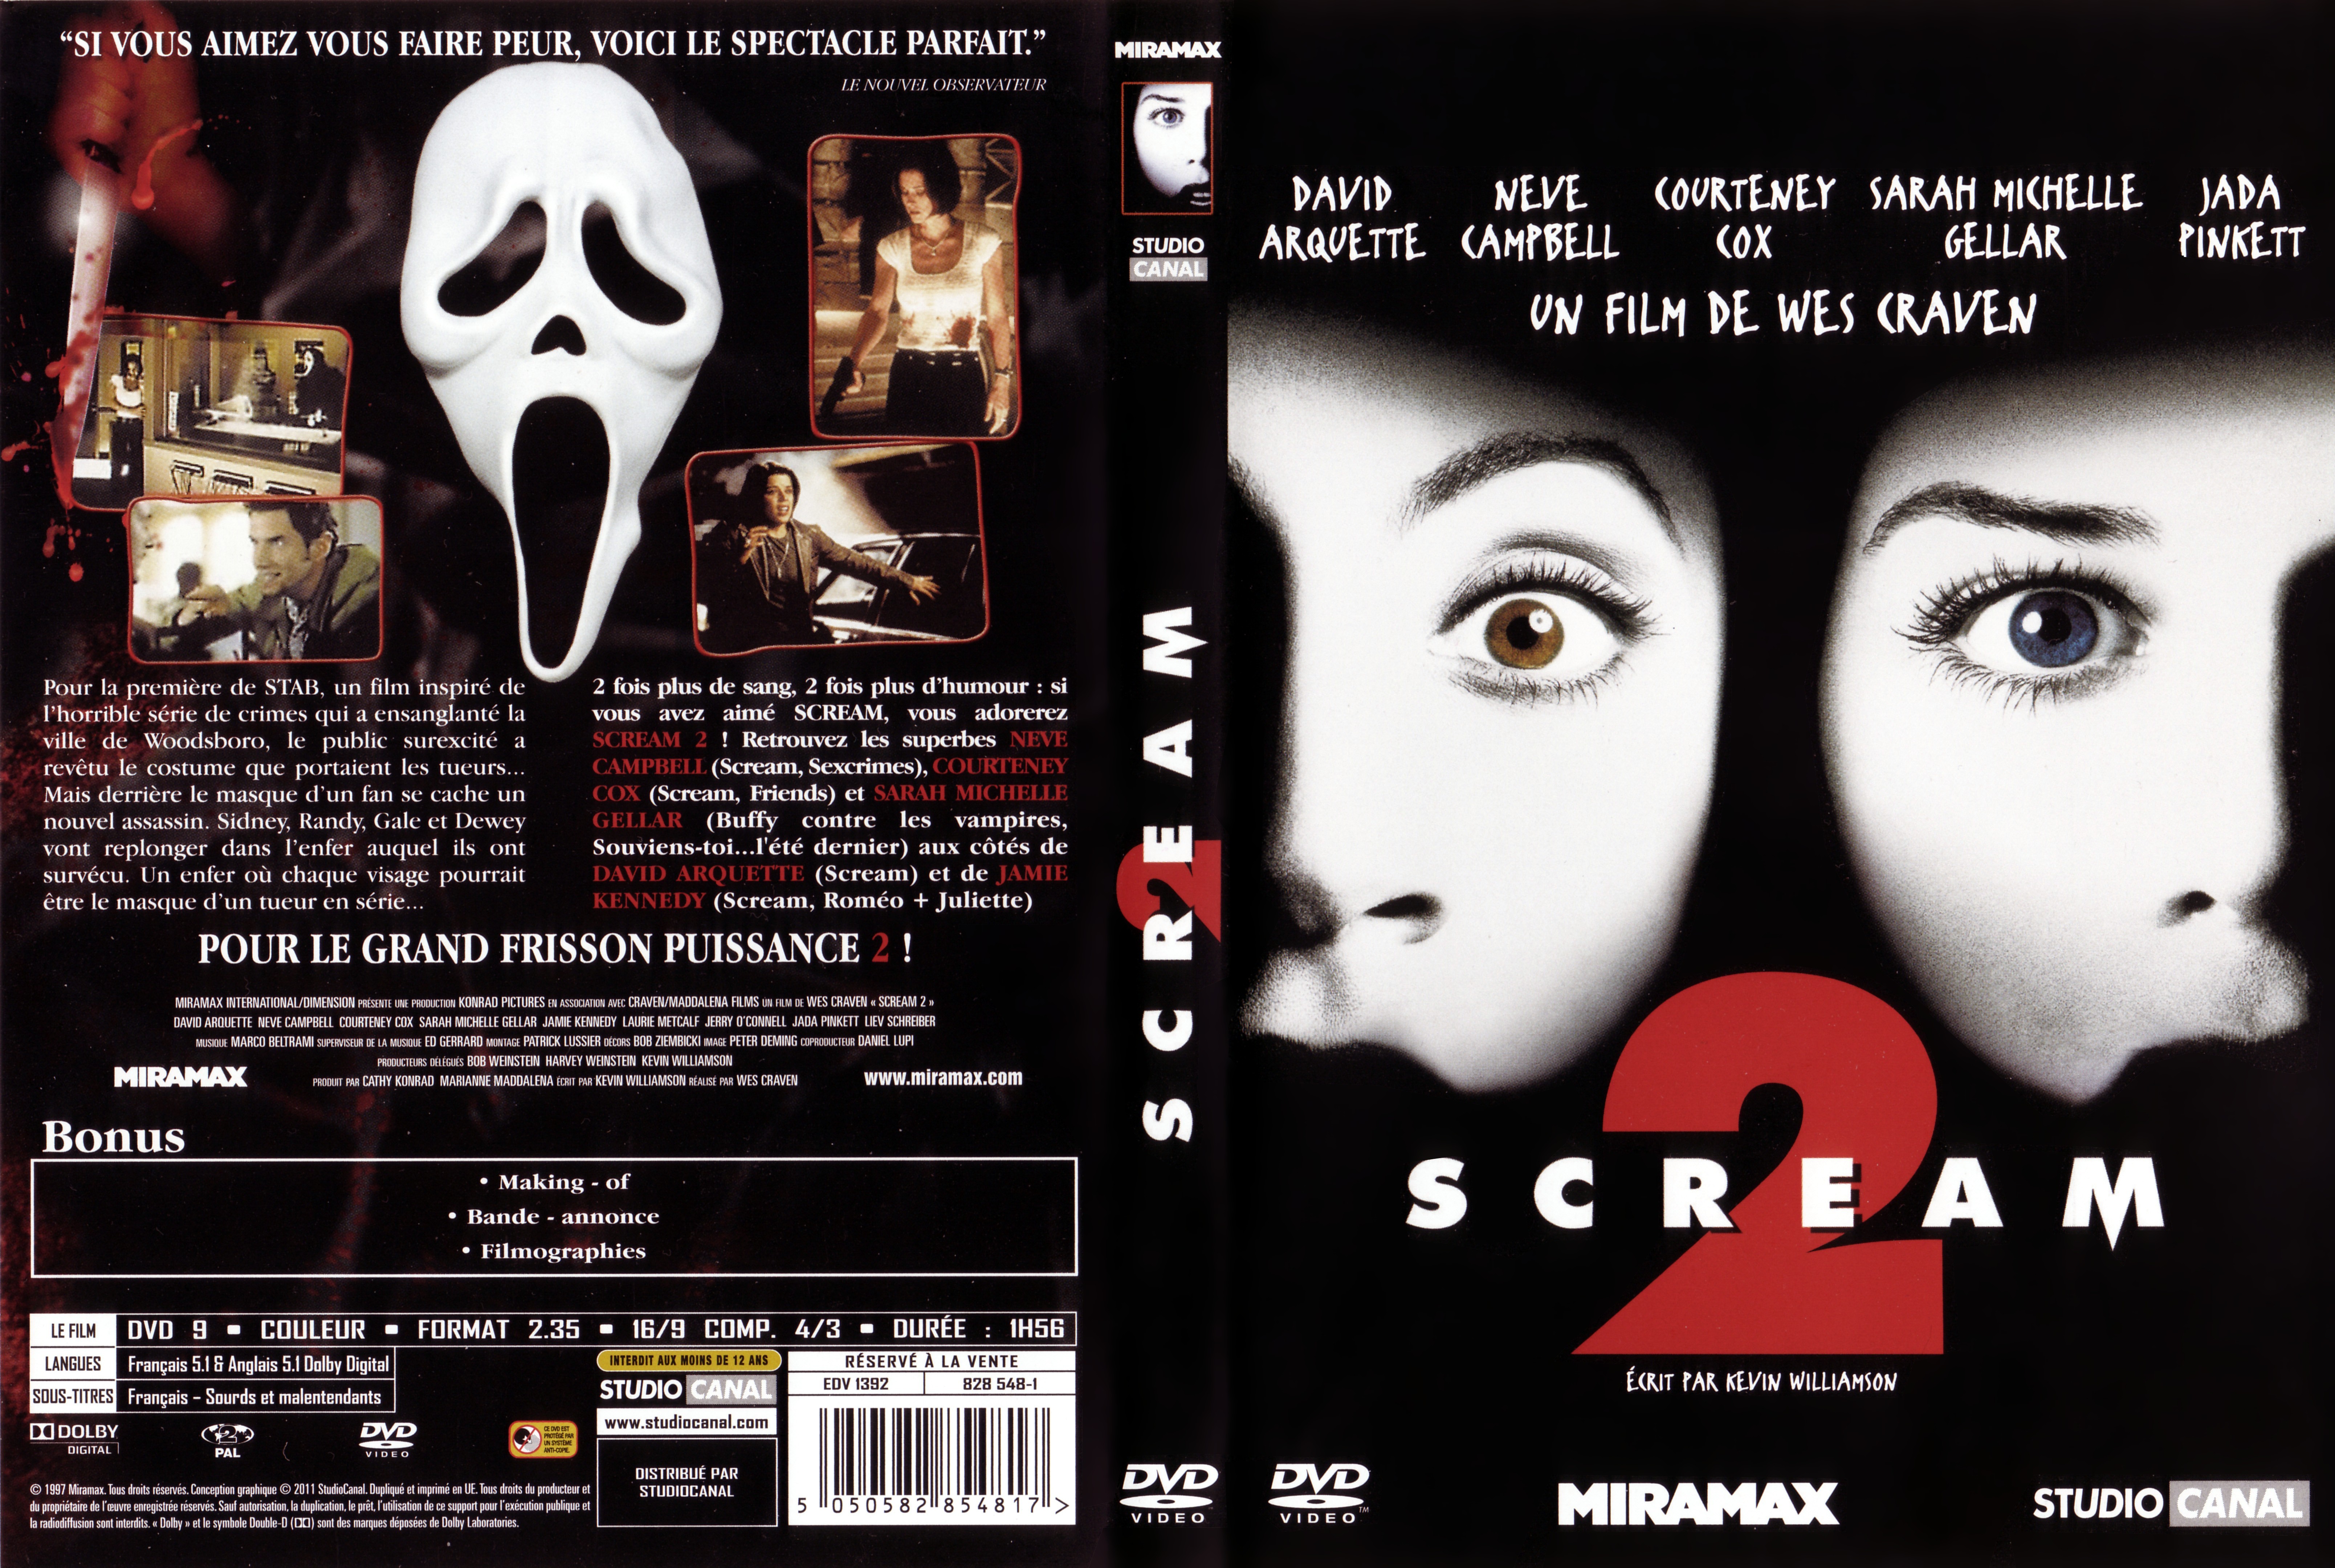 Jaquette DVD Scream 2 v4